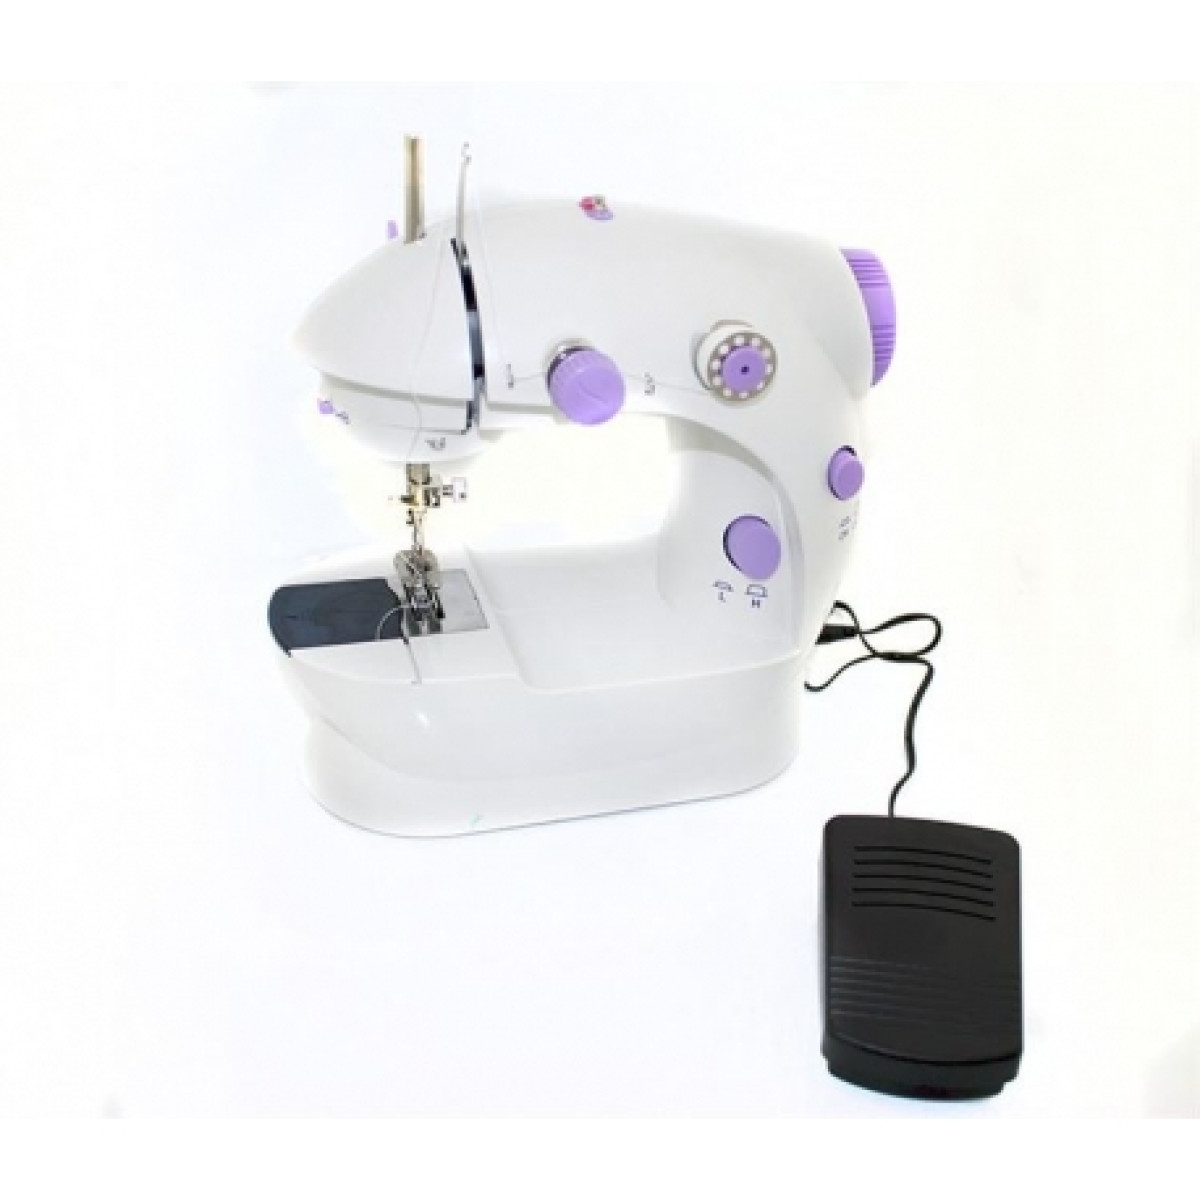 Мини швейная машинка компактная портняжка Sewing Machine td 0162